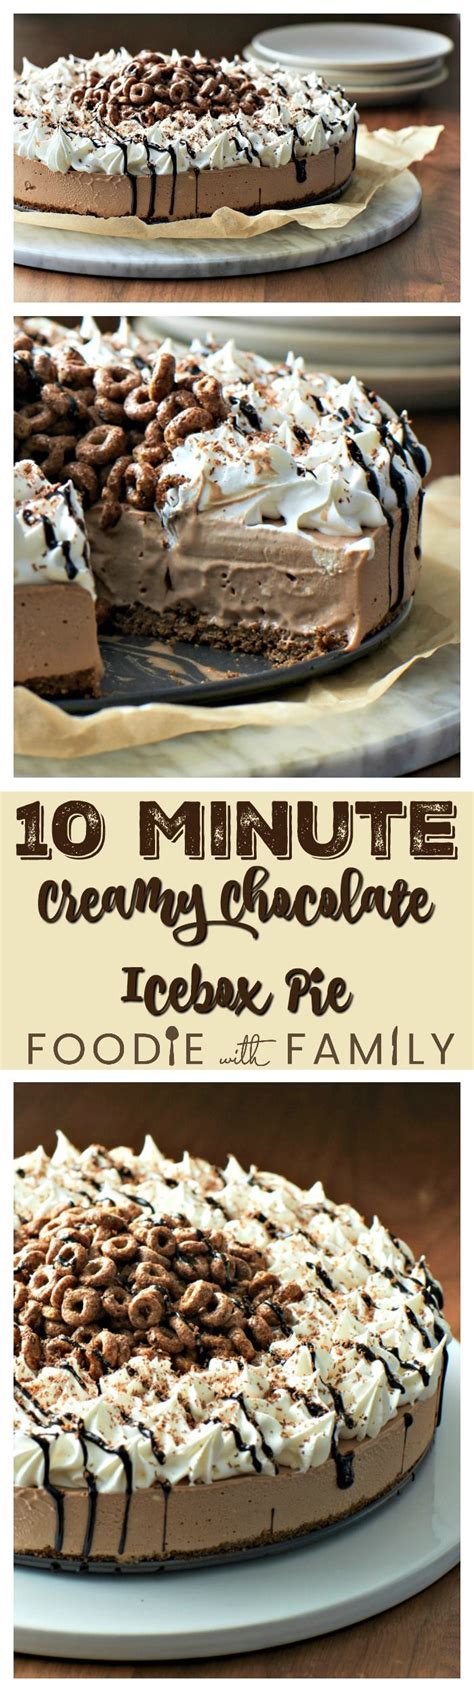 Minute Creamy Chocolate Icebox Pie Is As Impressive Tasting As It Is